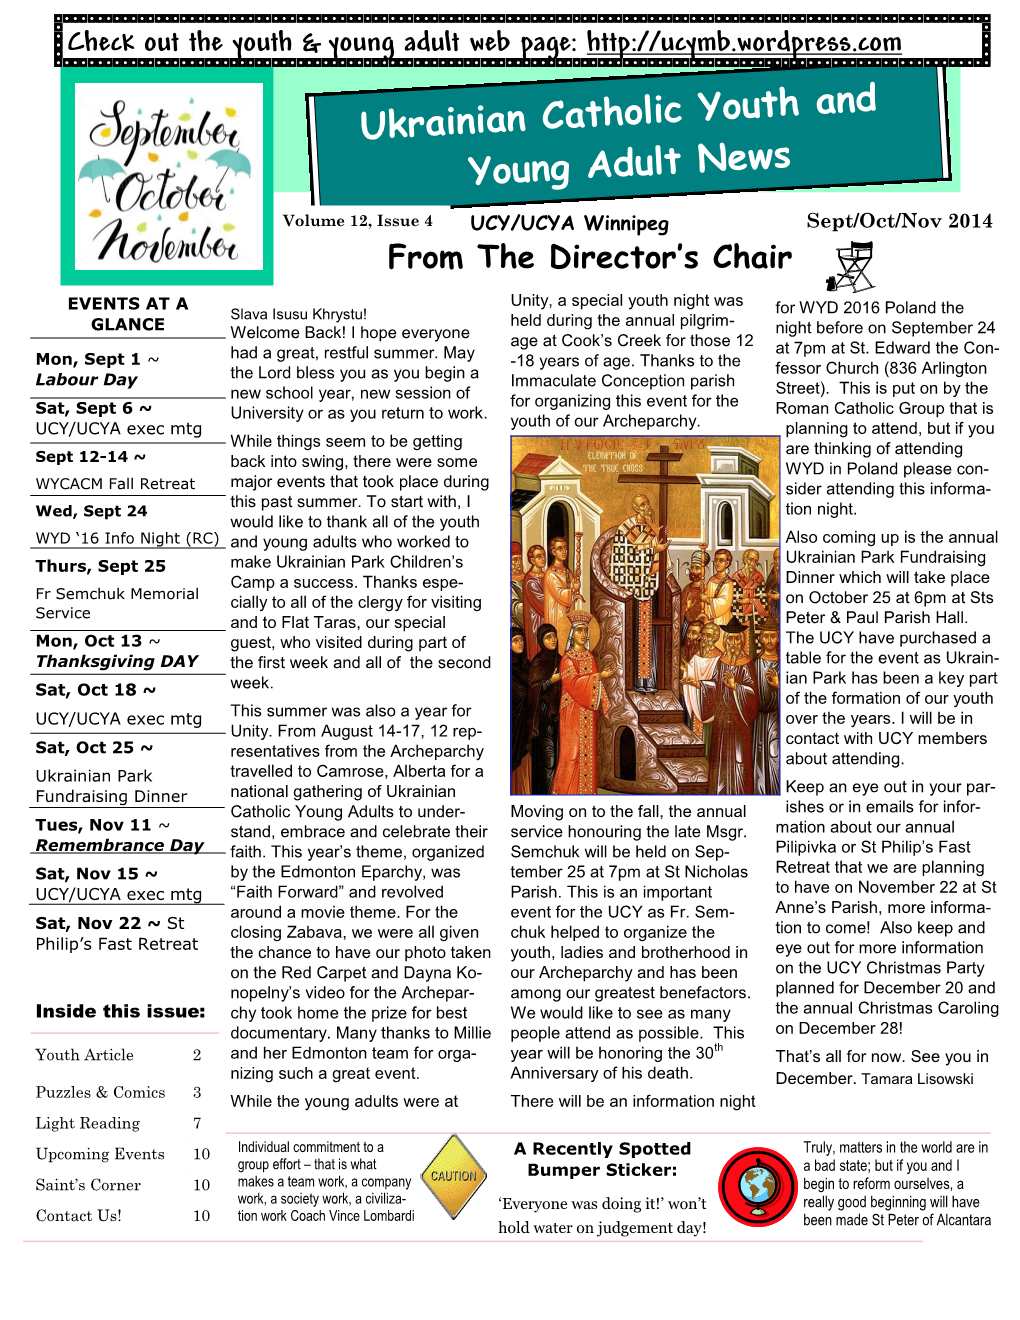 Ukrainian Catholic Youth and Young Adult News